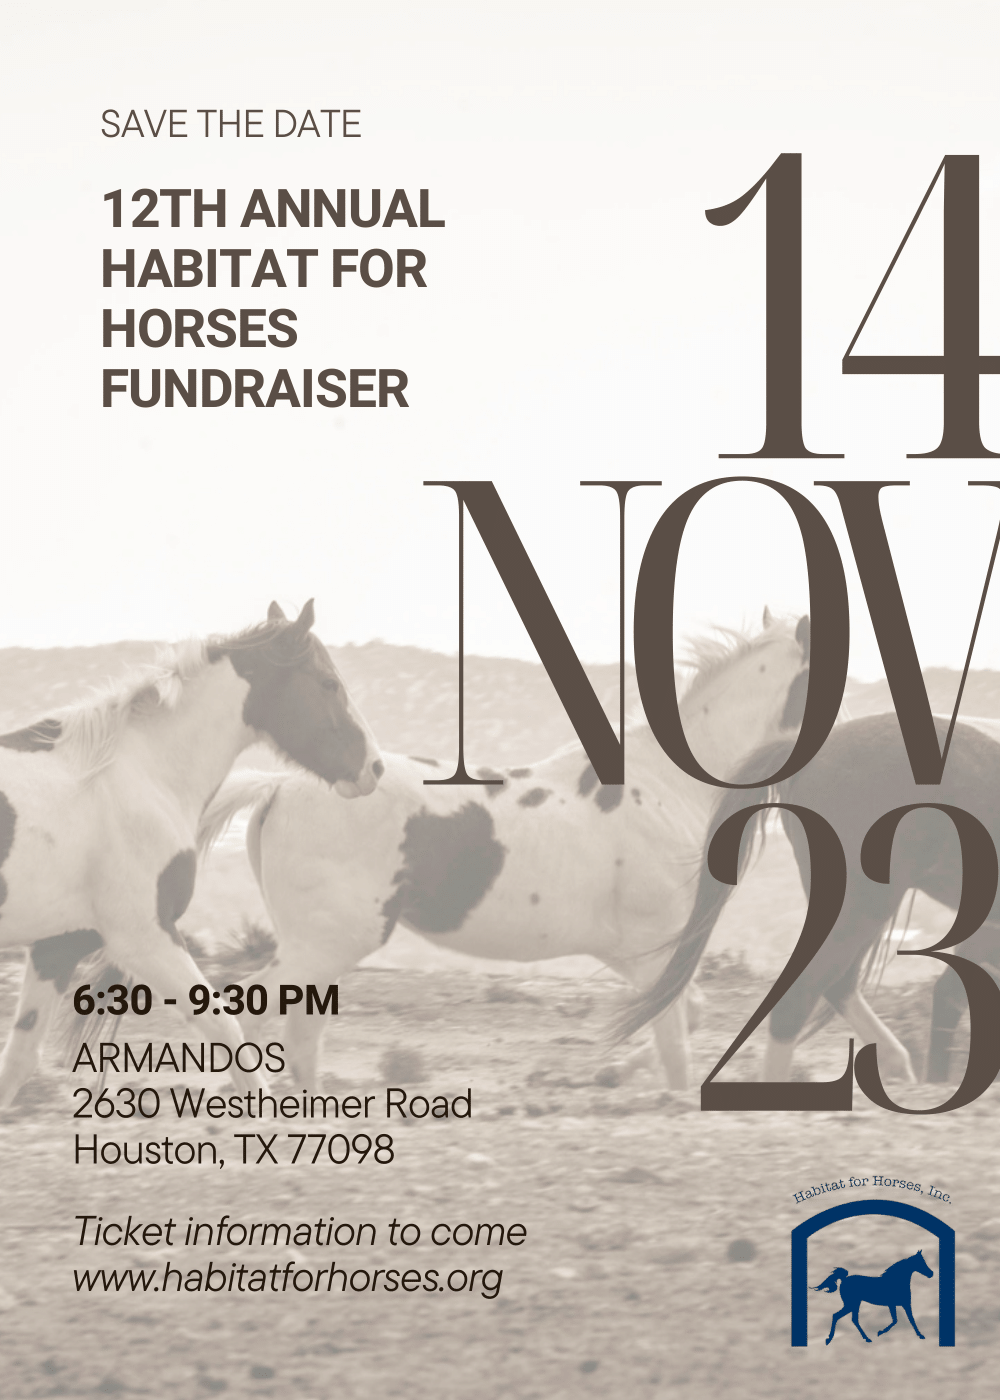 Save the Date: Habitat for Horses fundraiser